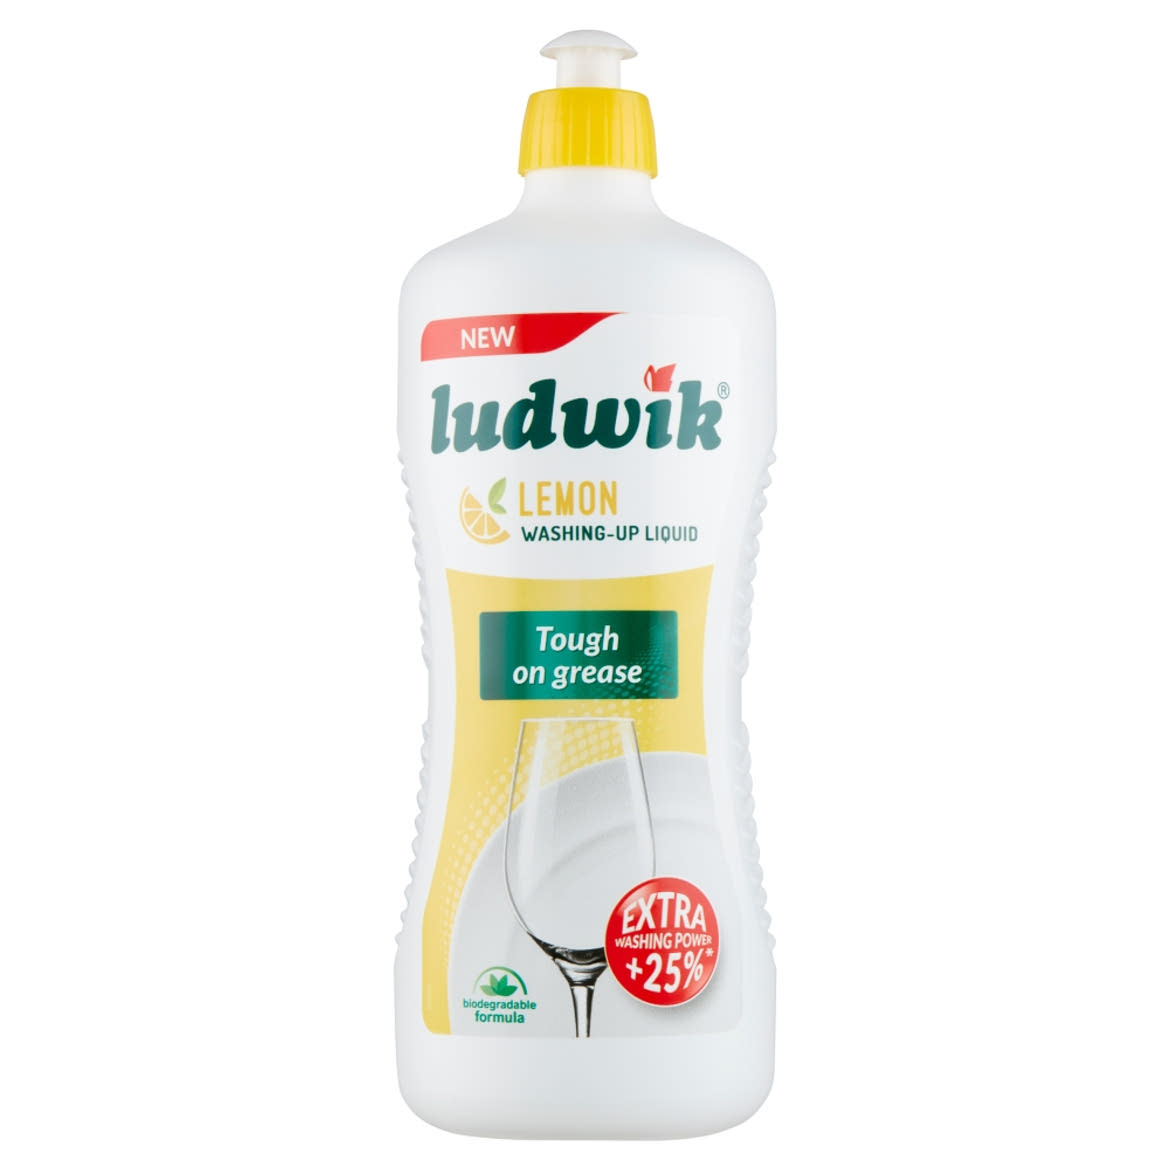 Ludwik citrom illatú mosogatószer